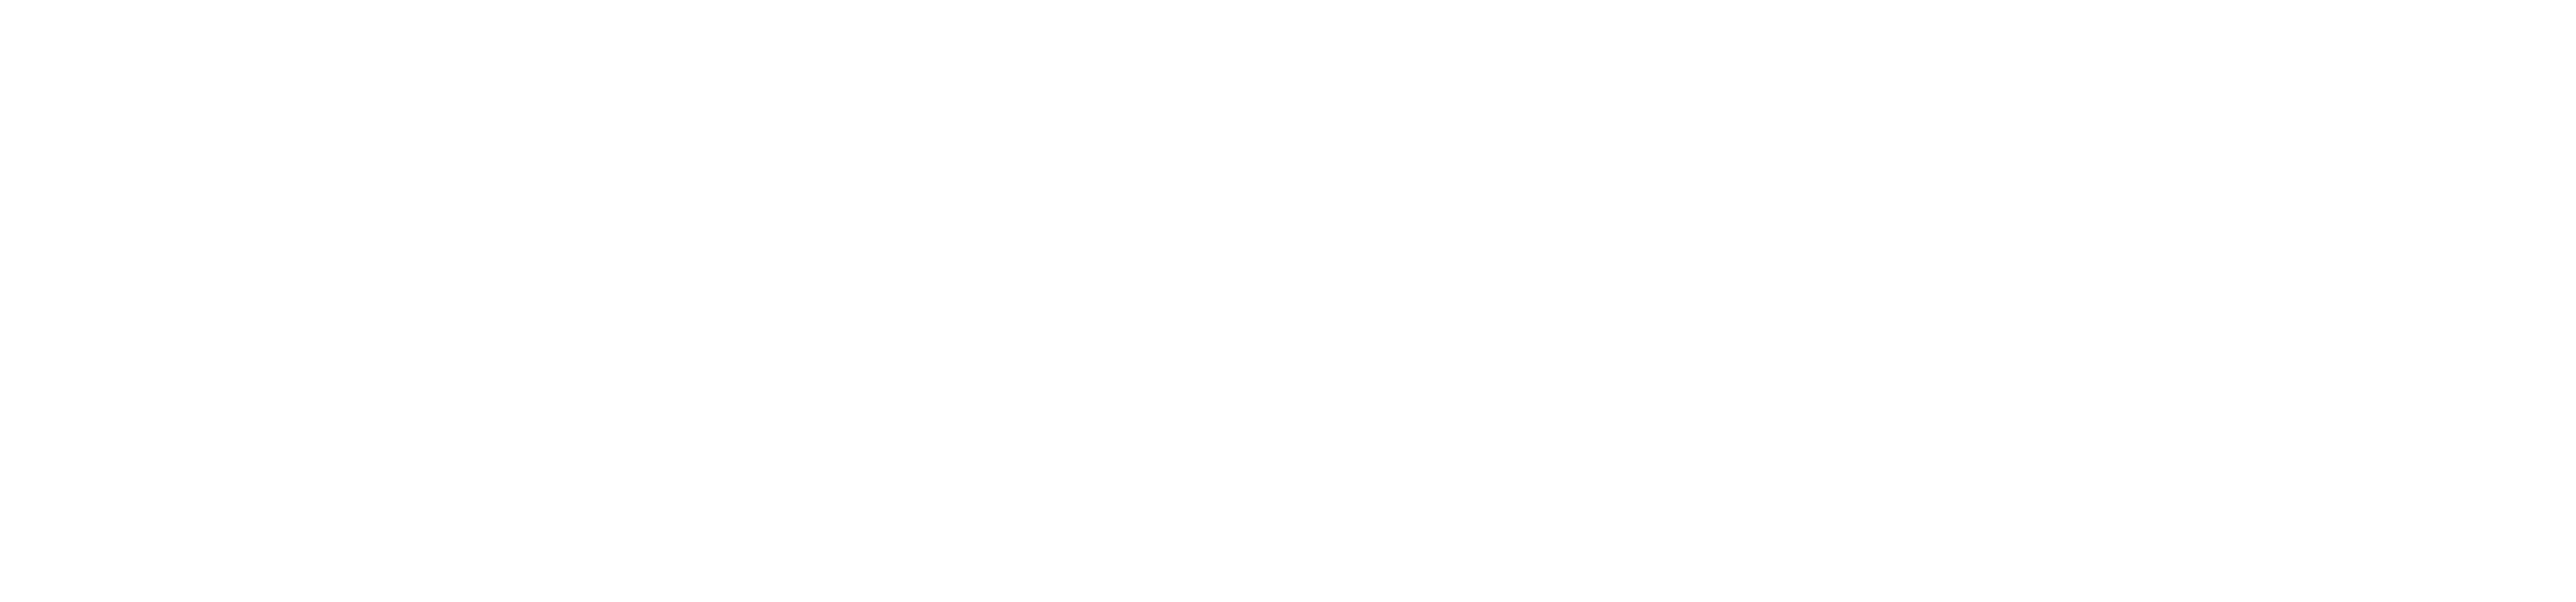 Decorating Den Interiors logo black